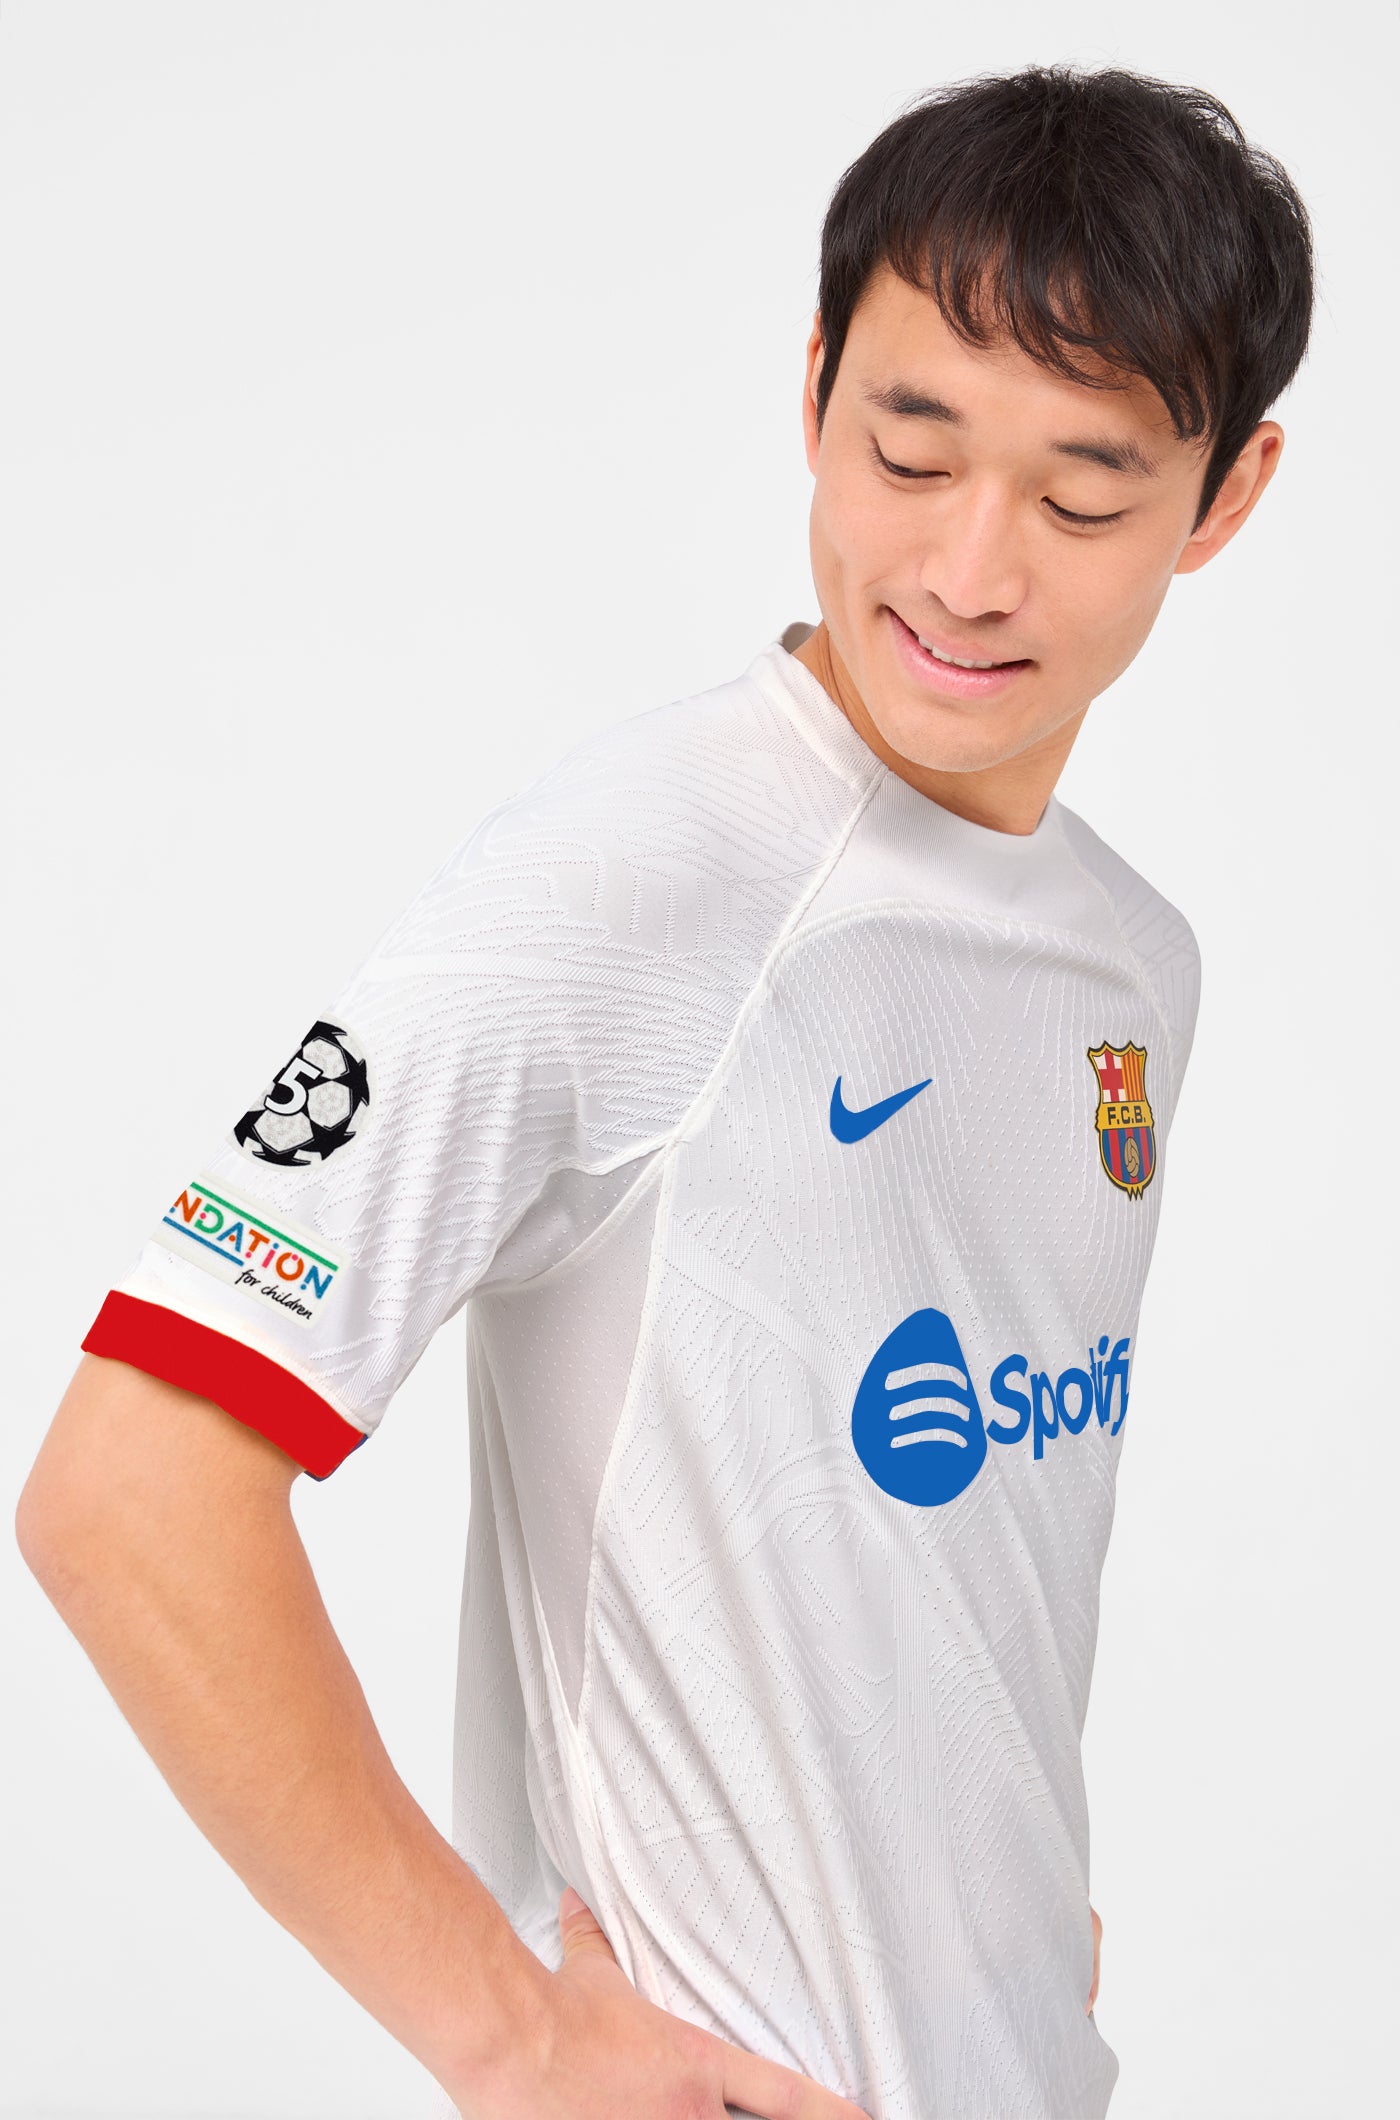 UCL FC Barcelona away shirt 23/24 Player’s Edition - FERMÍN